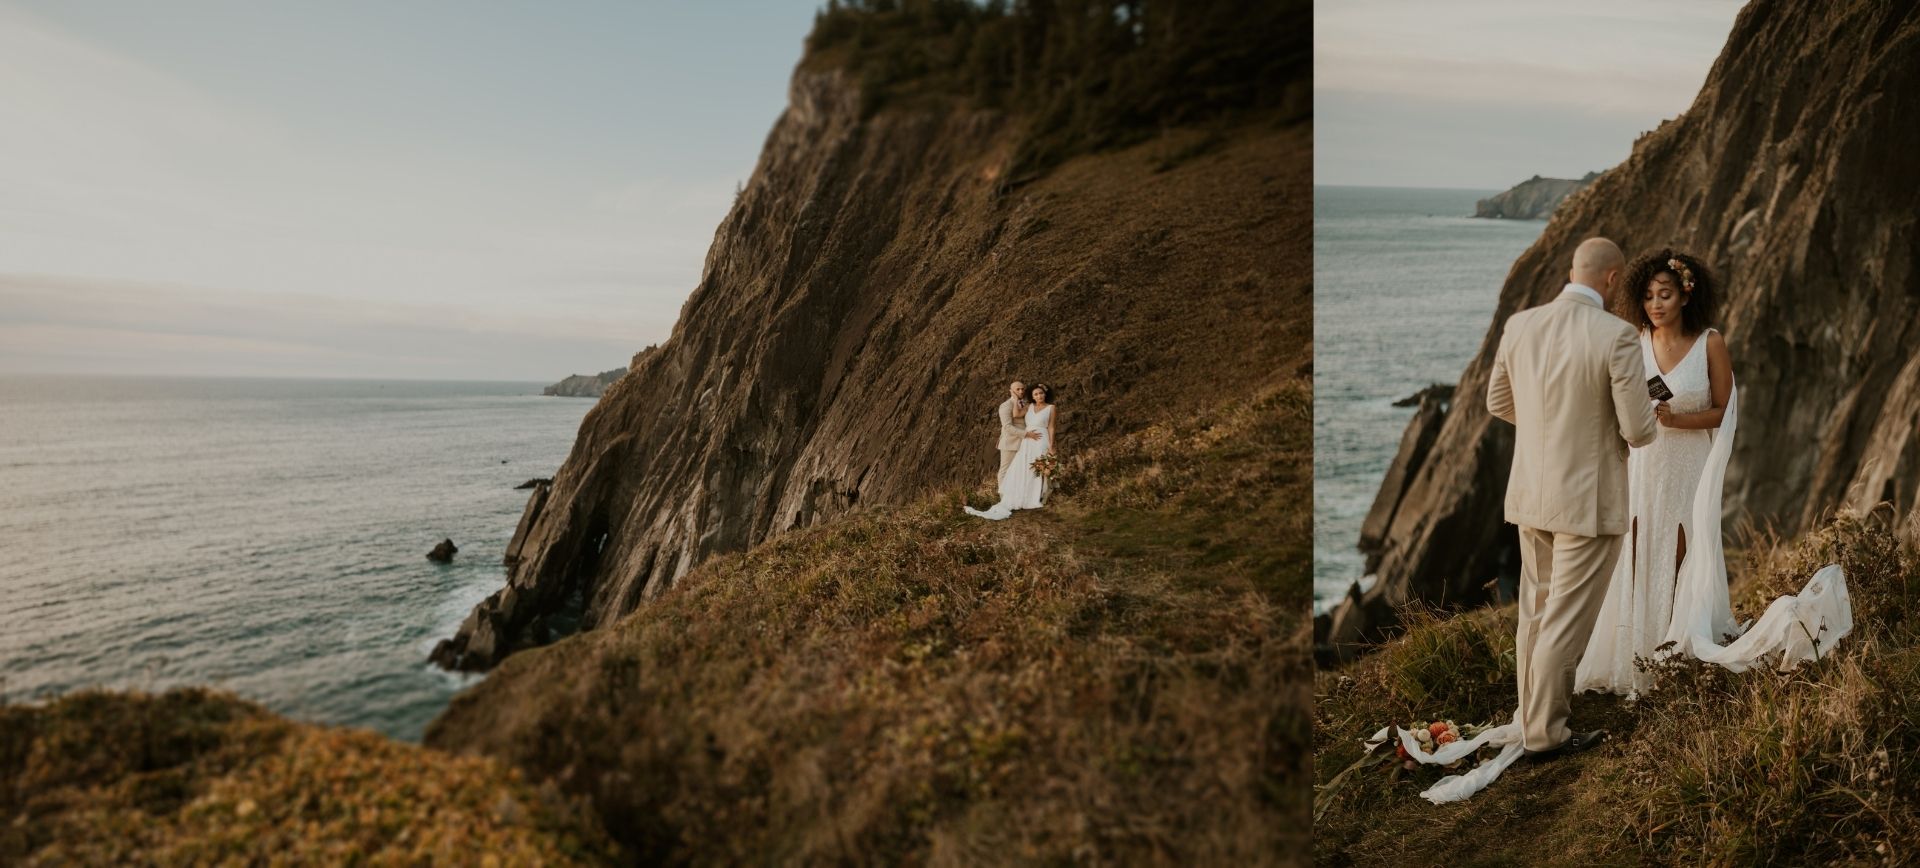 oregon coast elopement package - bride and groom at their coast adventure wedding